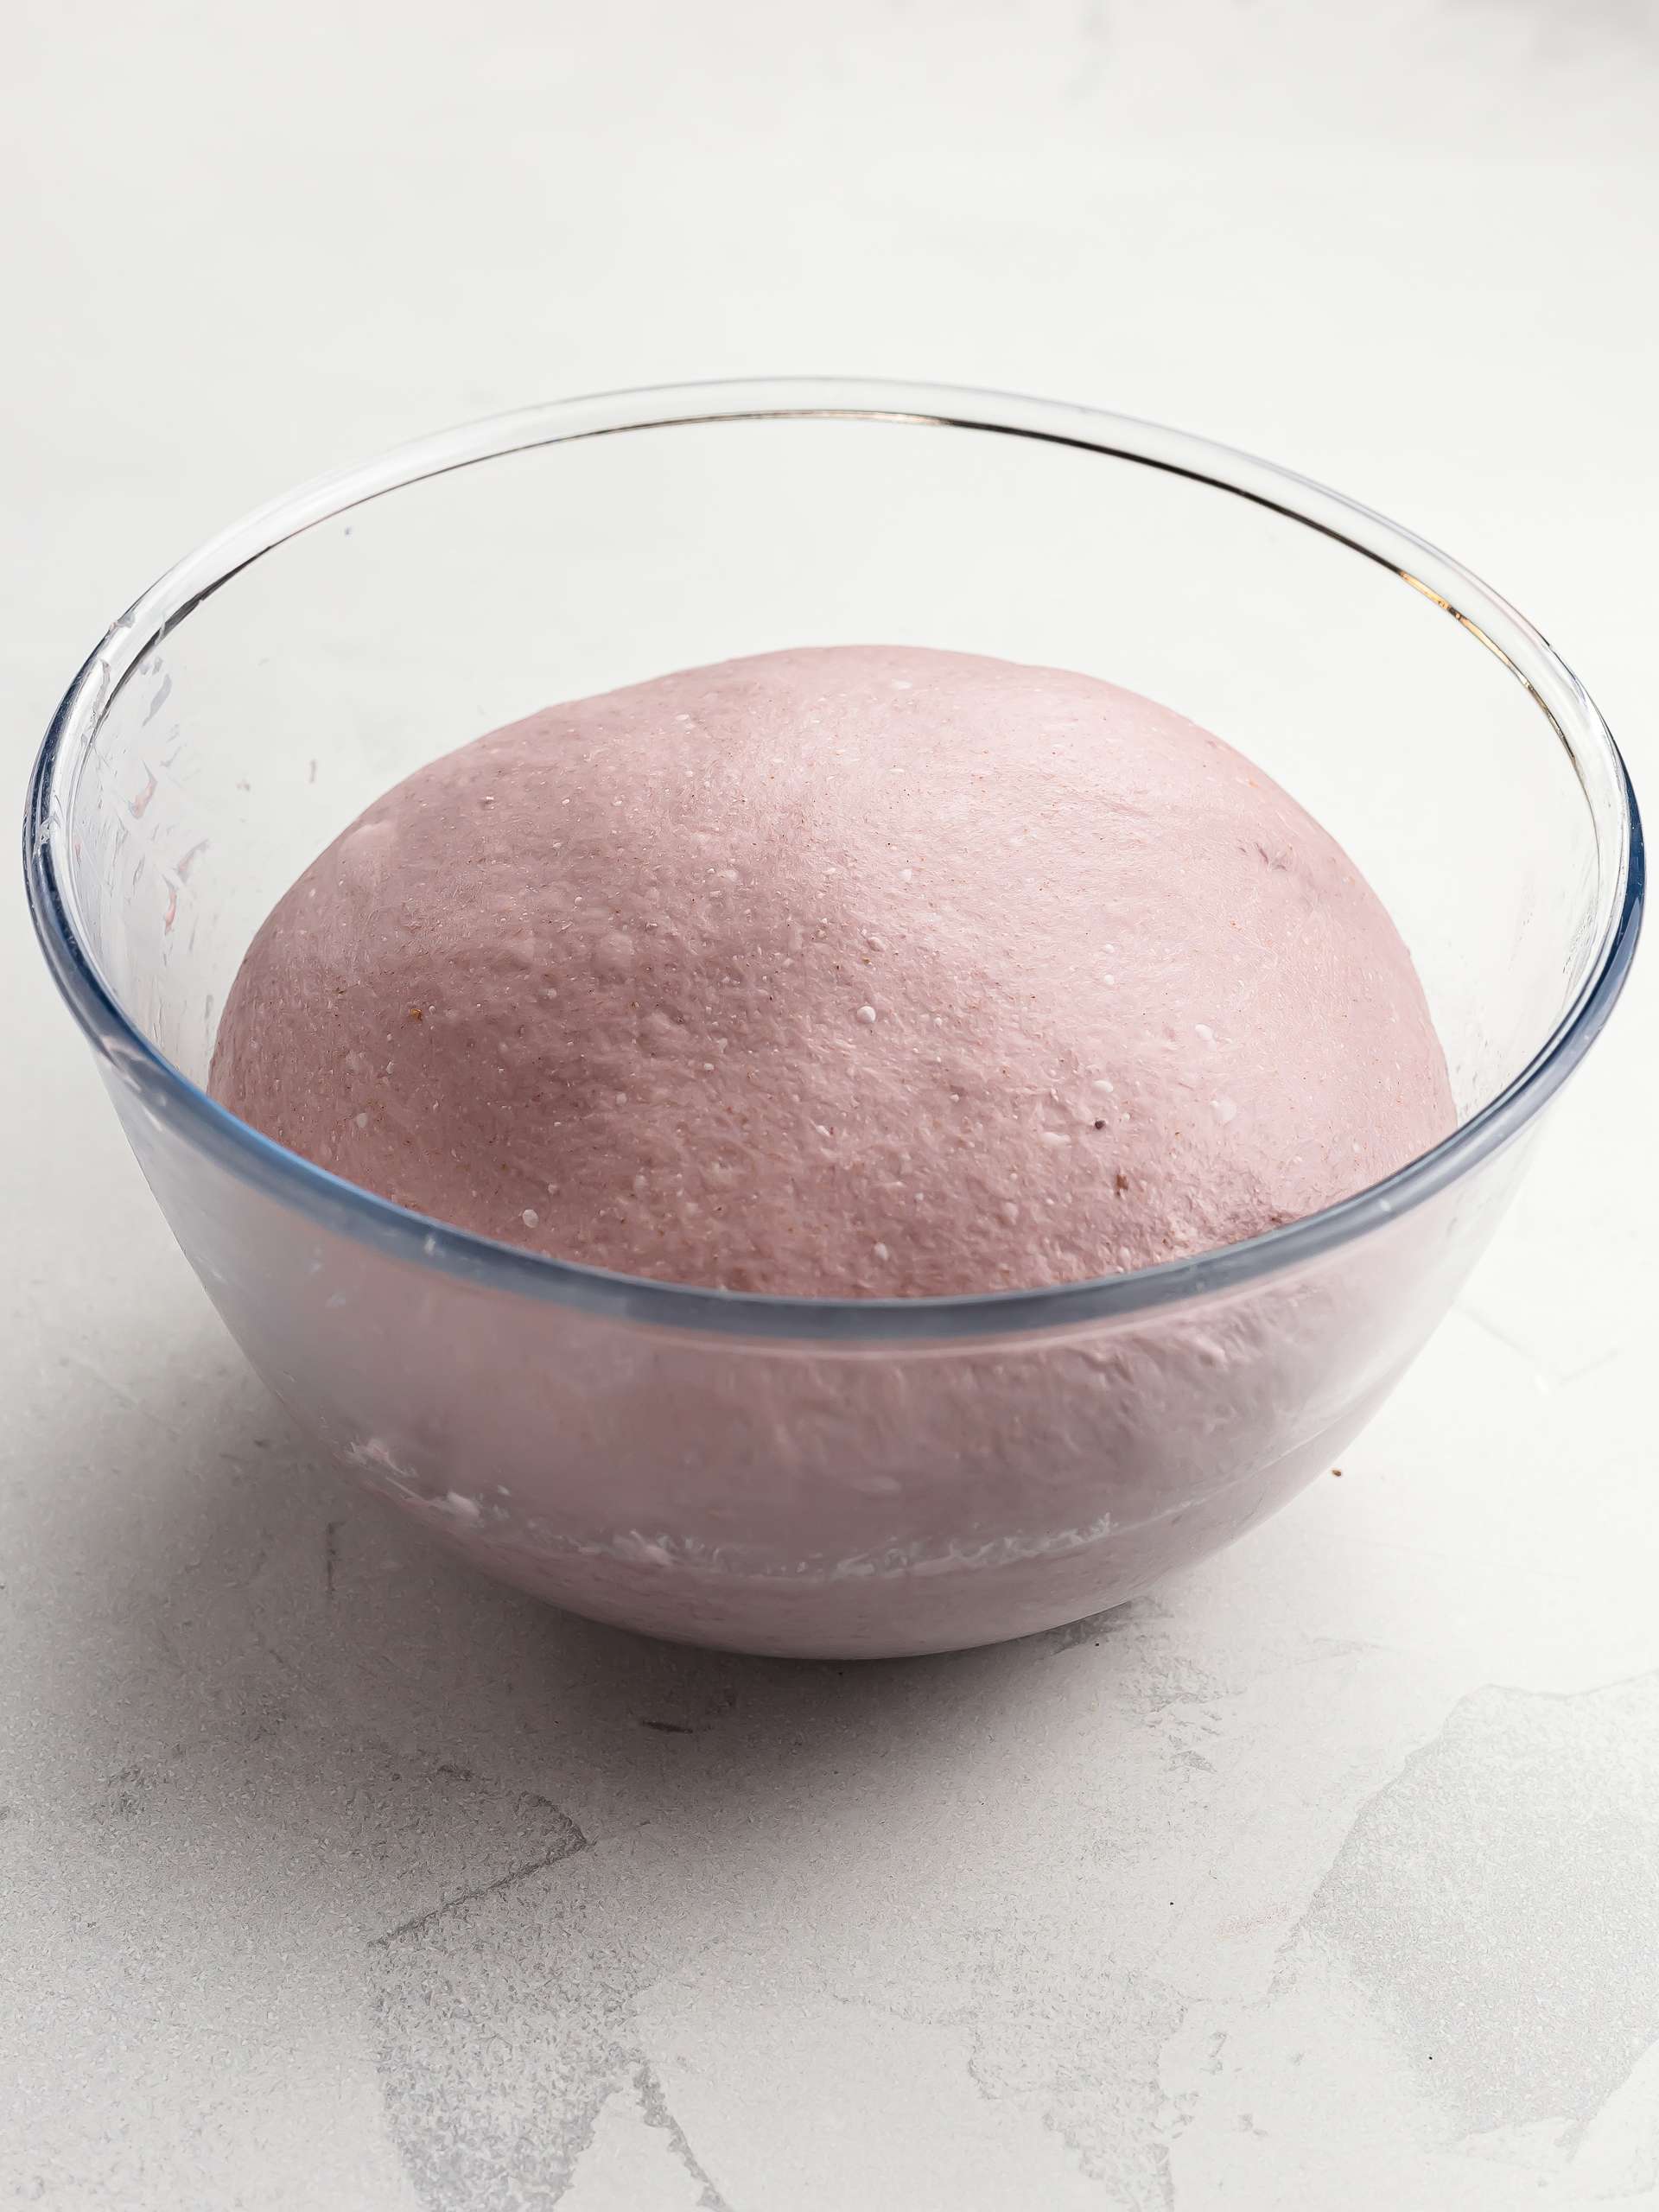 ube bread dough proving in a bowl